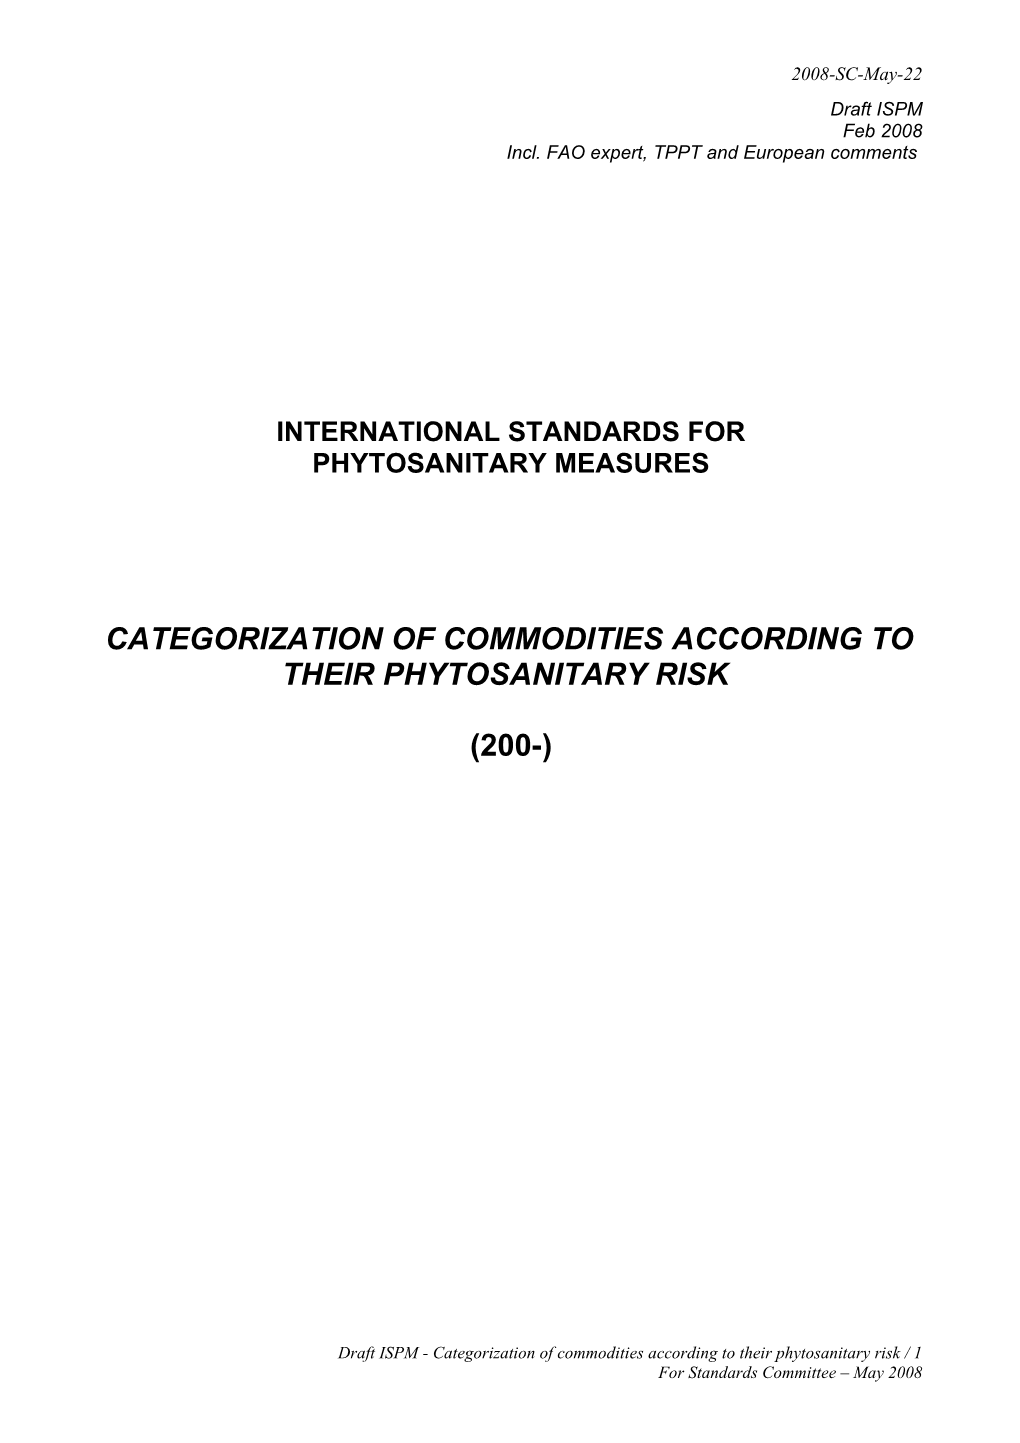 Phytosanitary Risk Cathegorization for Commodities